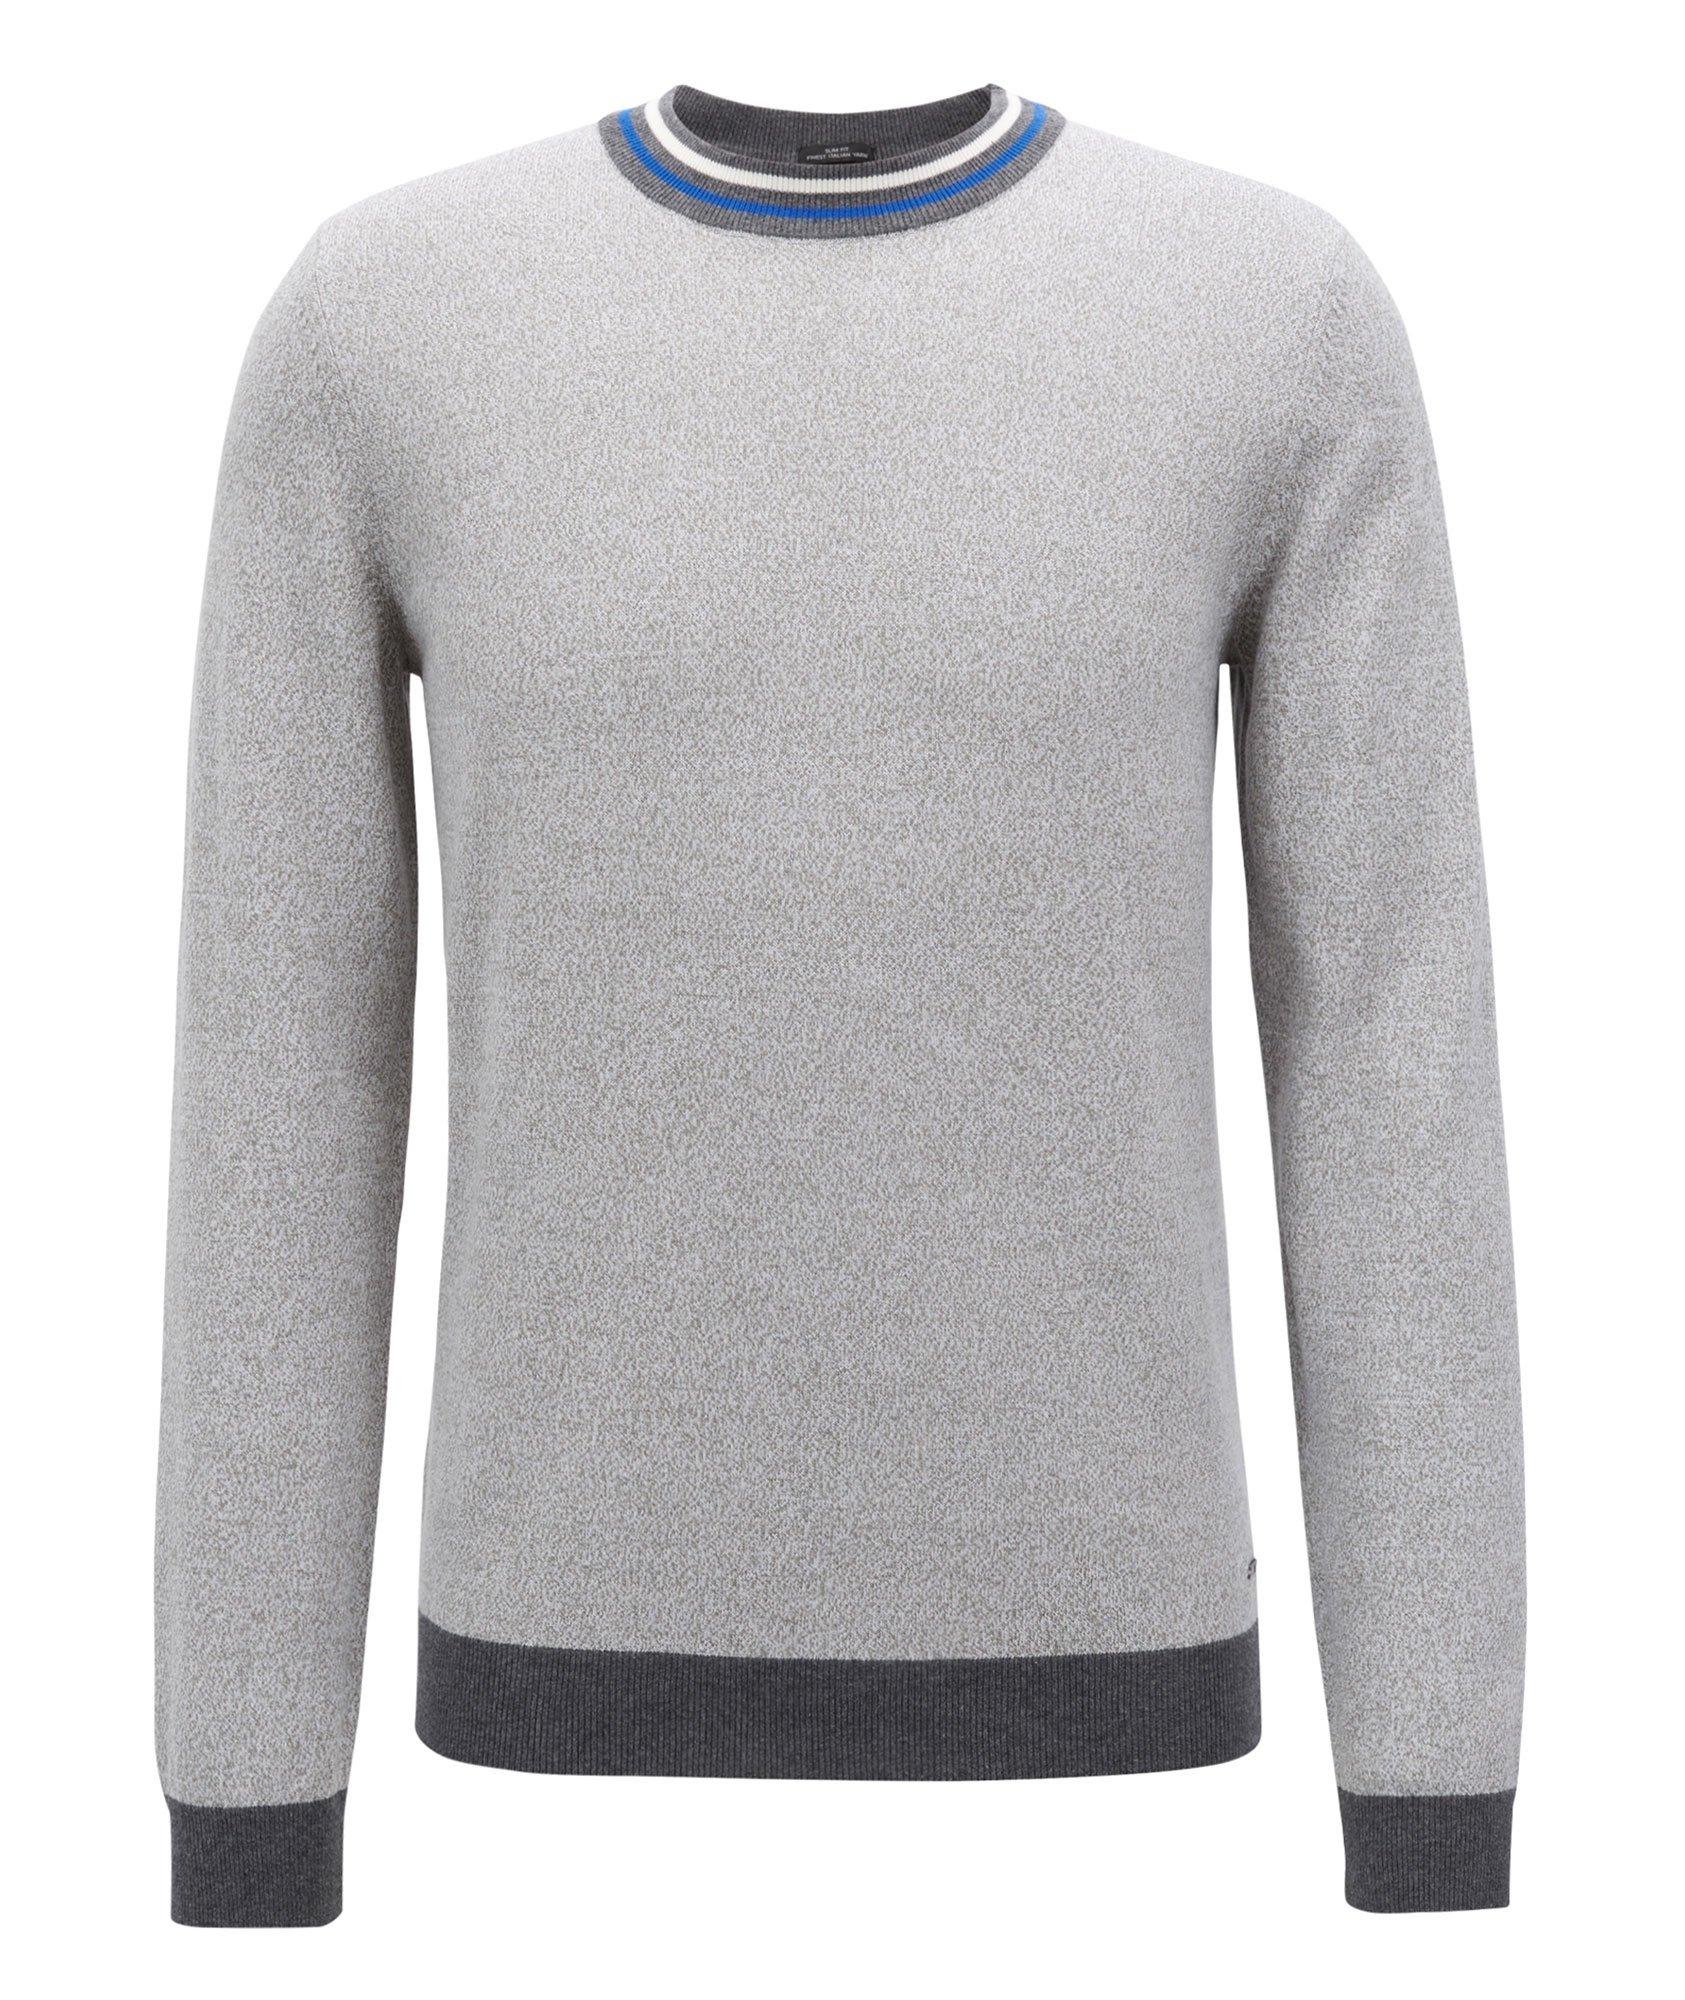 Cotton Sweater image 0